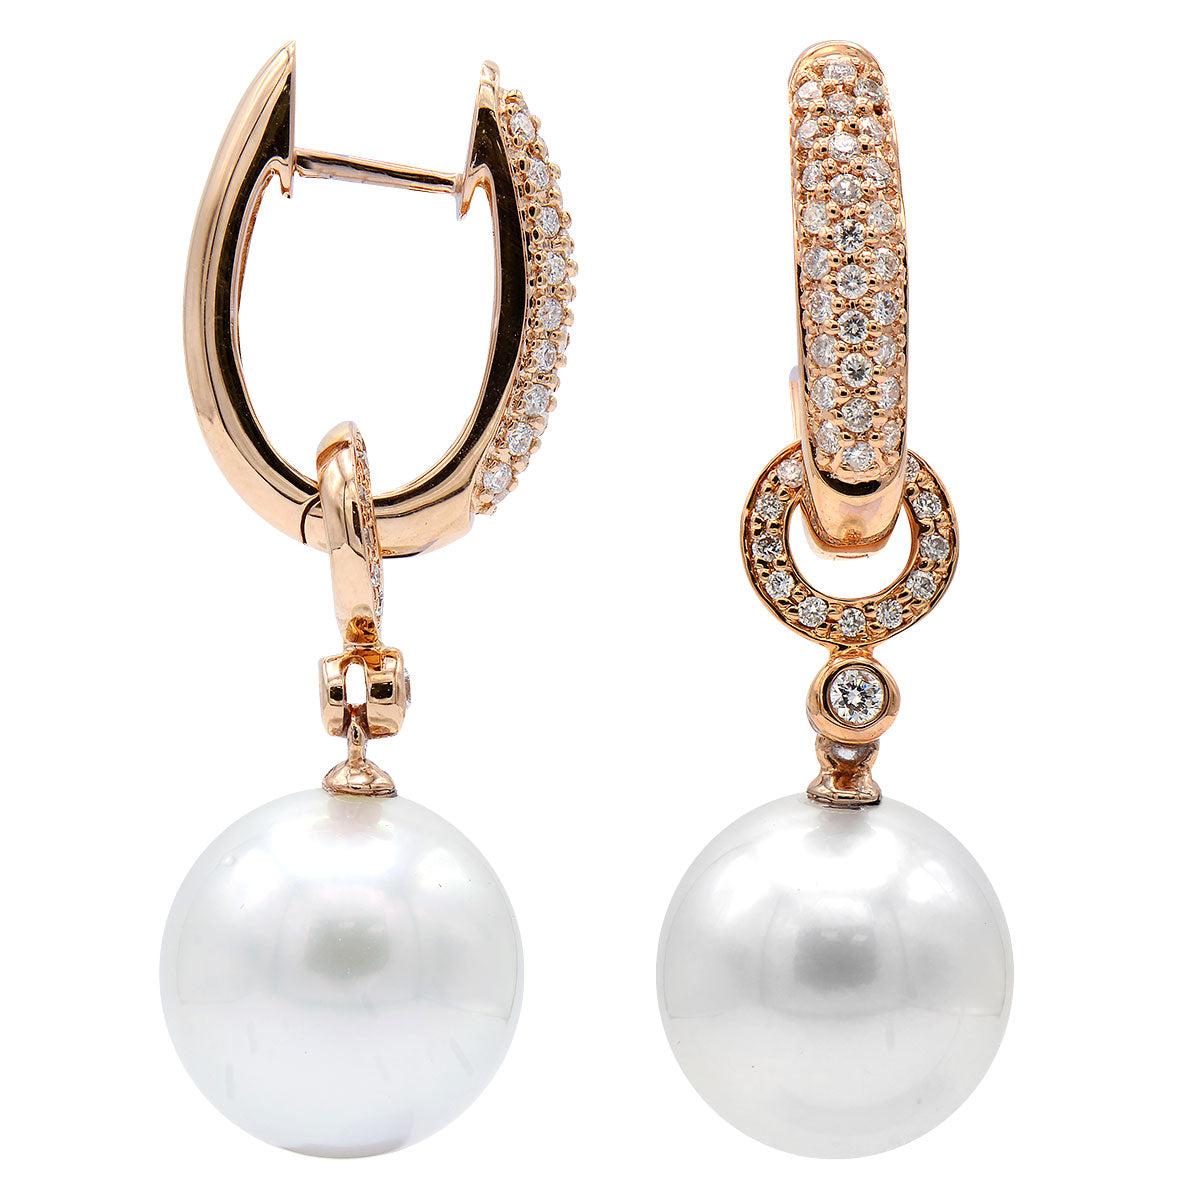 18KR White South Sea Pearl Earrings, 11-12mm